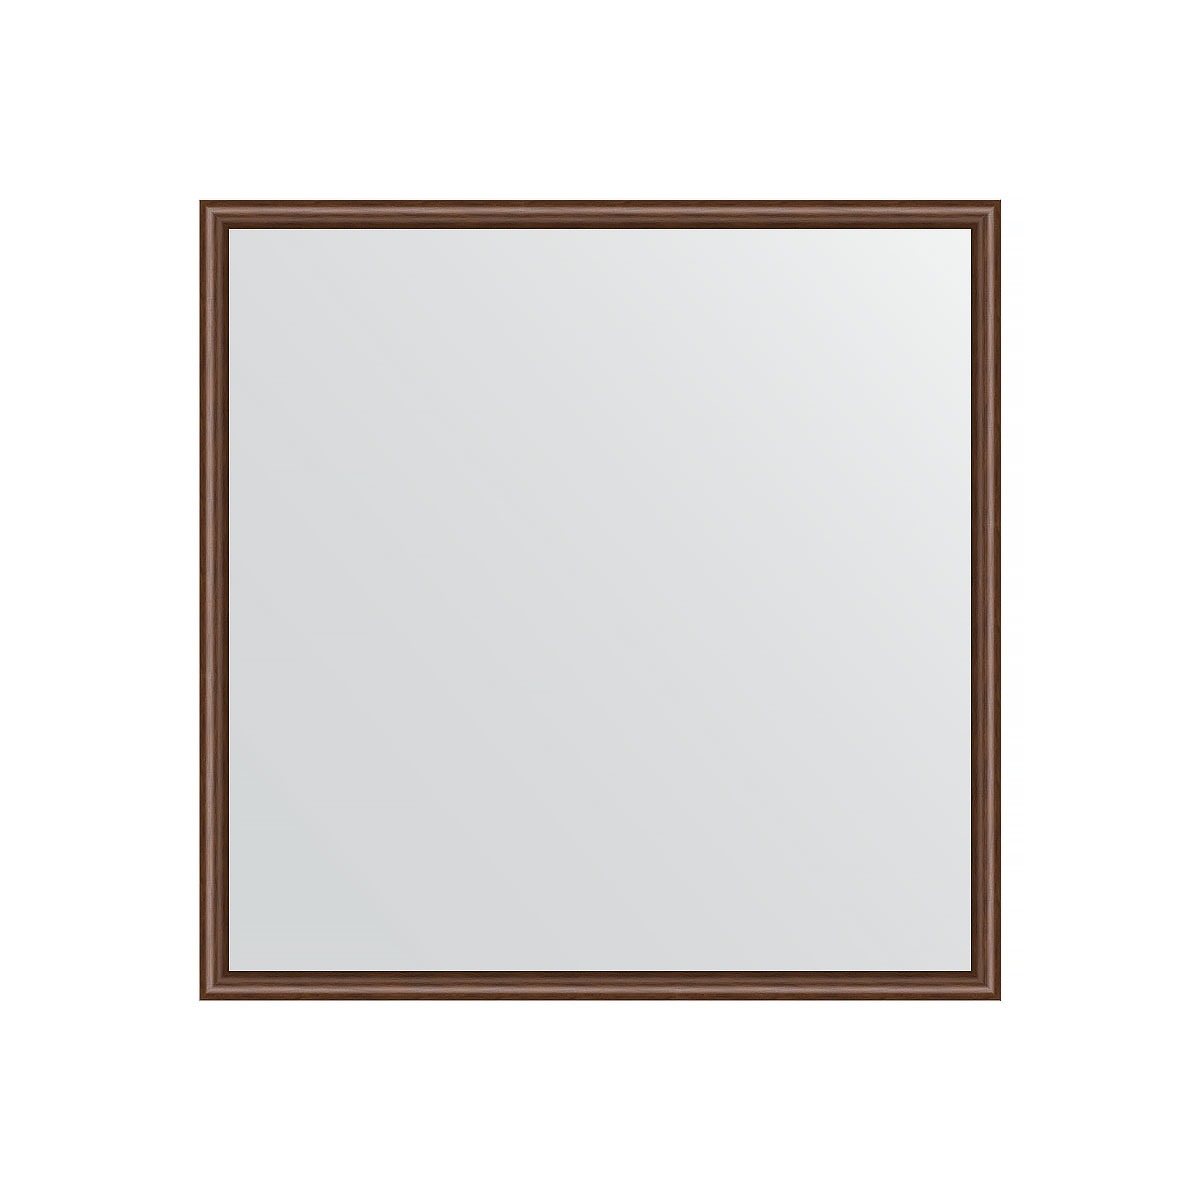 Зеркало в багетной раме Evoform орех 22 мм 68х68 см зеркало в багетной раме evoform сосна 22 мм 68х68 см